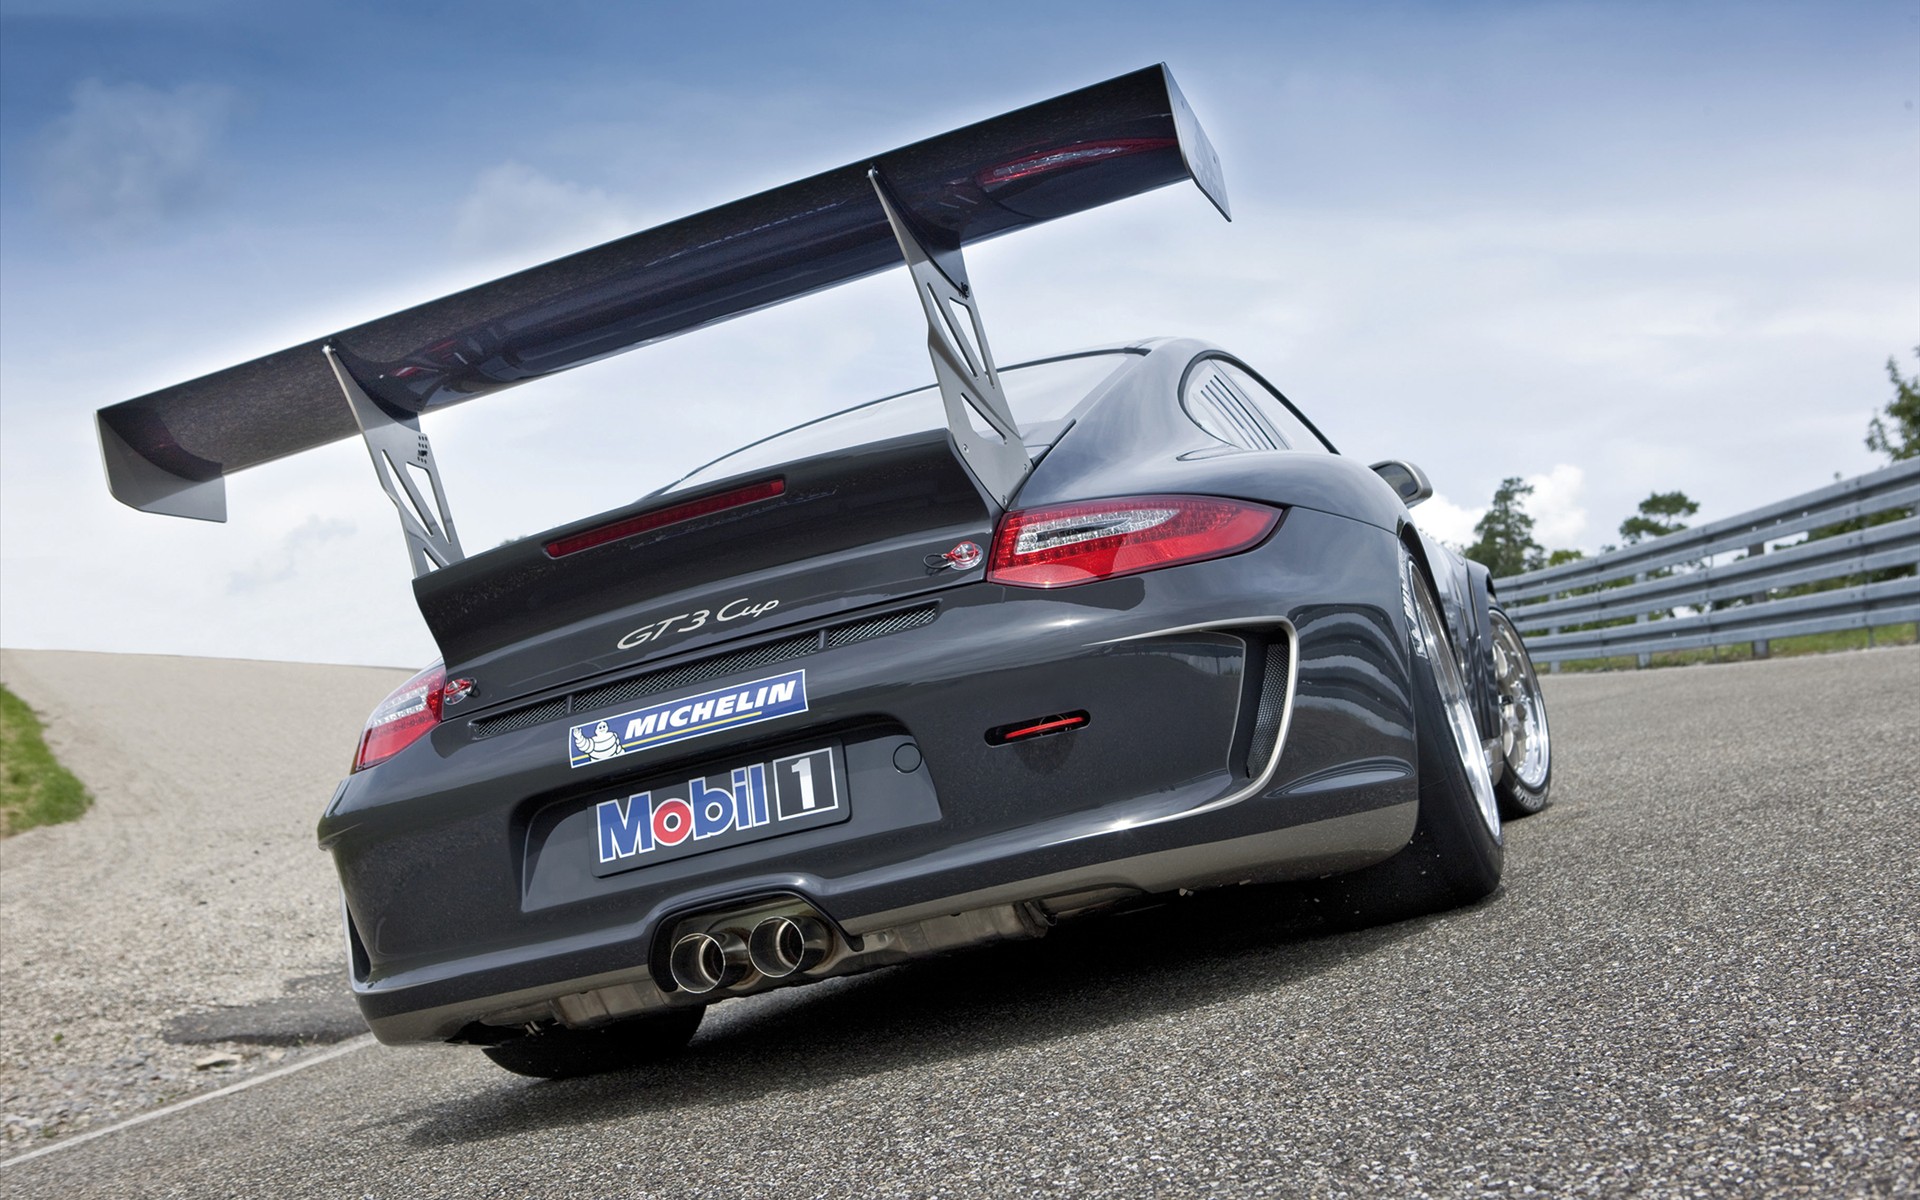 Porsche HD Wallpaper | Background Image | 1920x1200 | ID ...